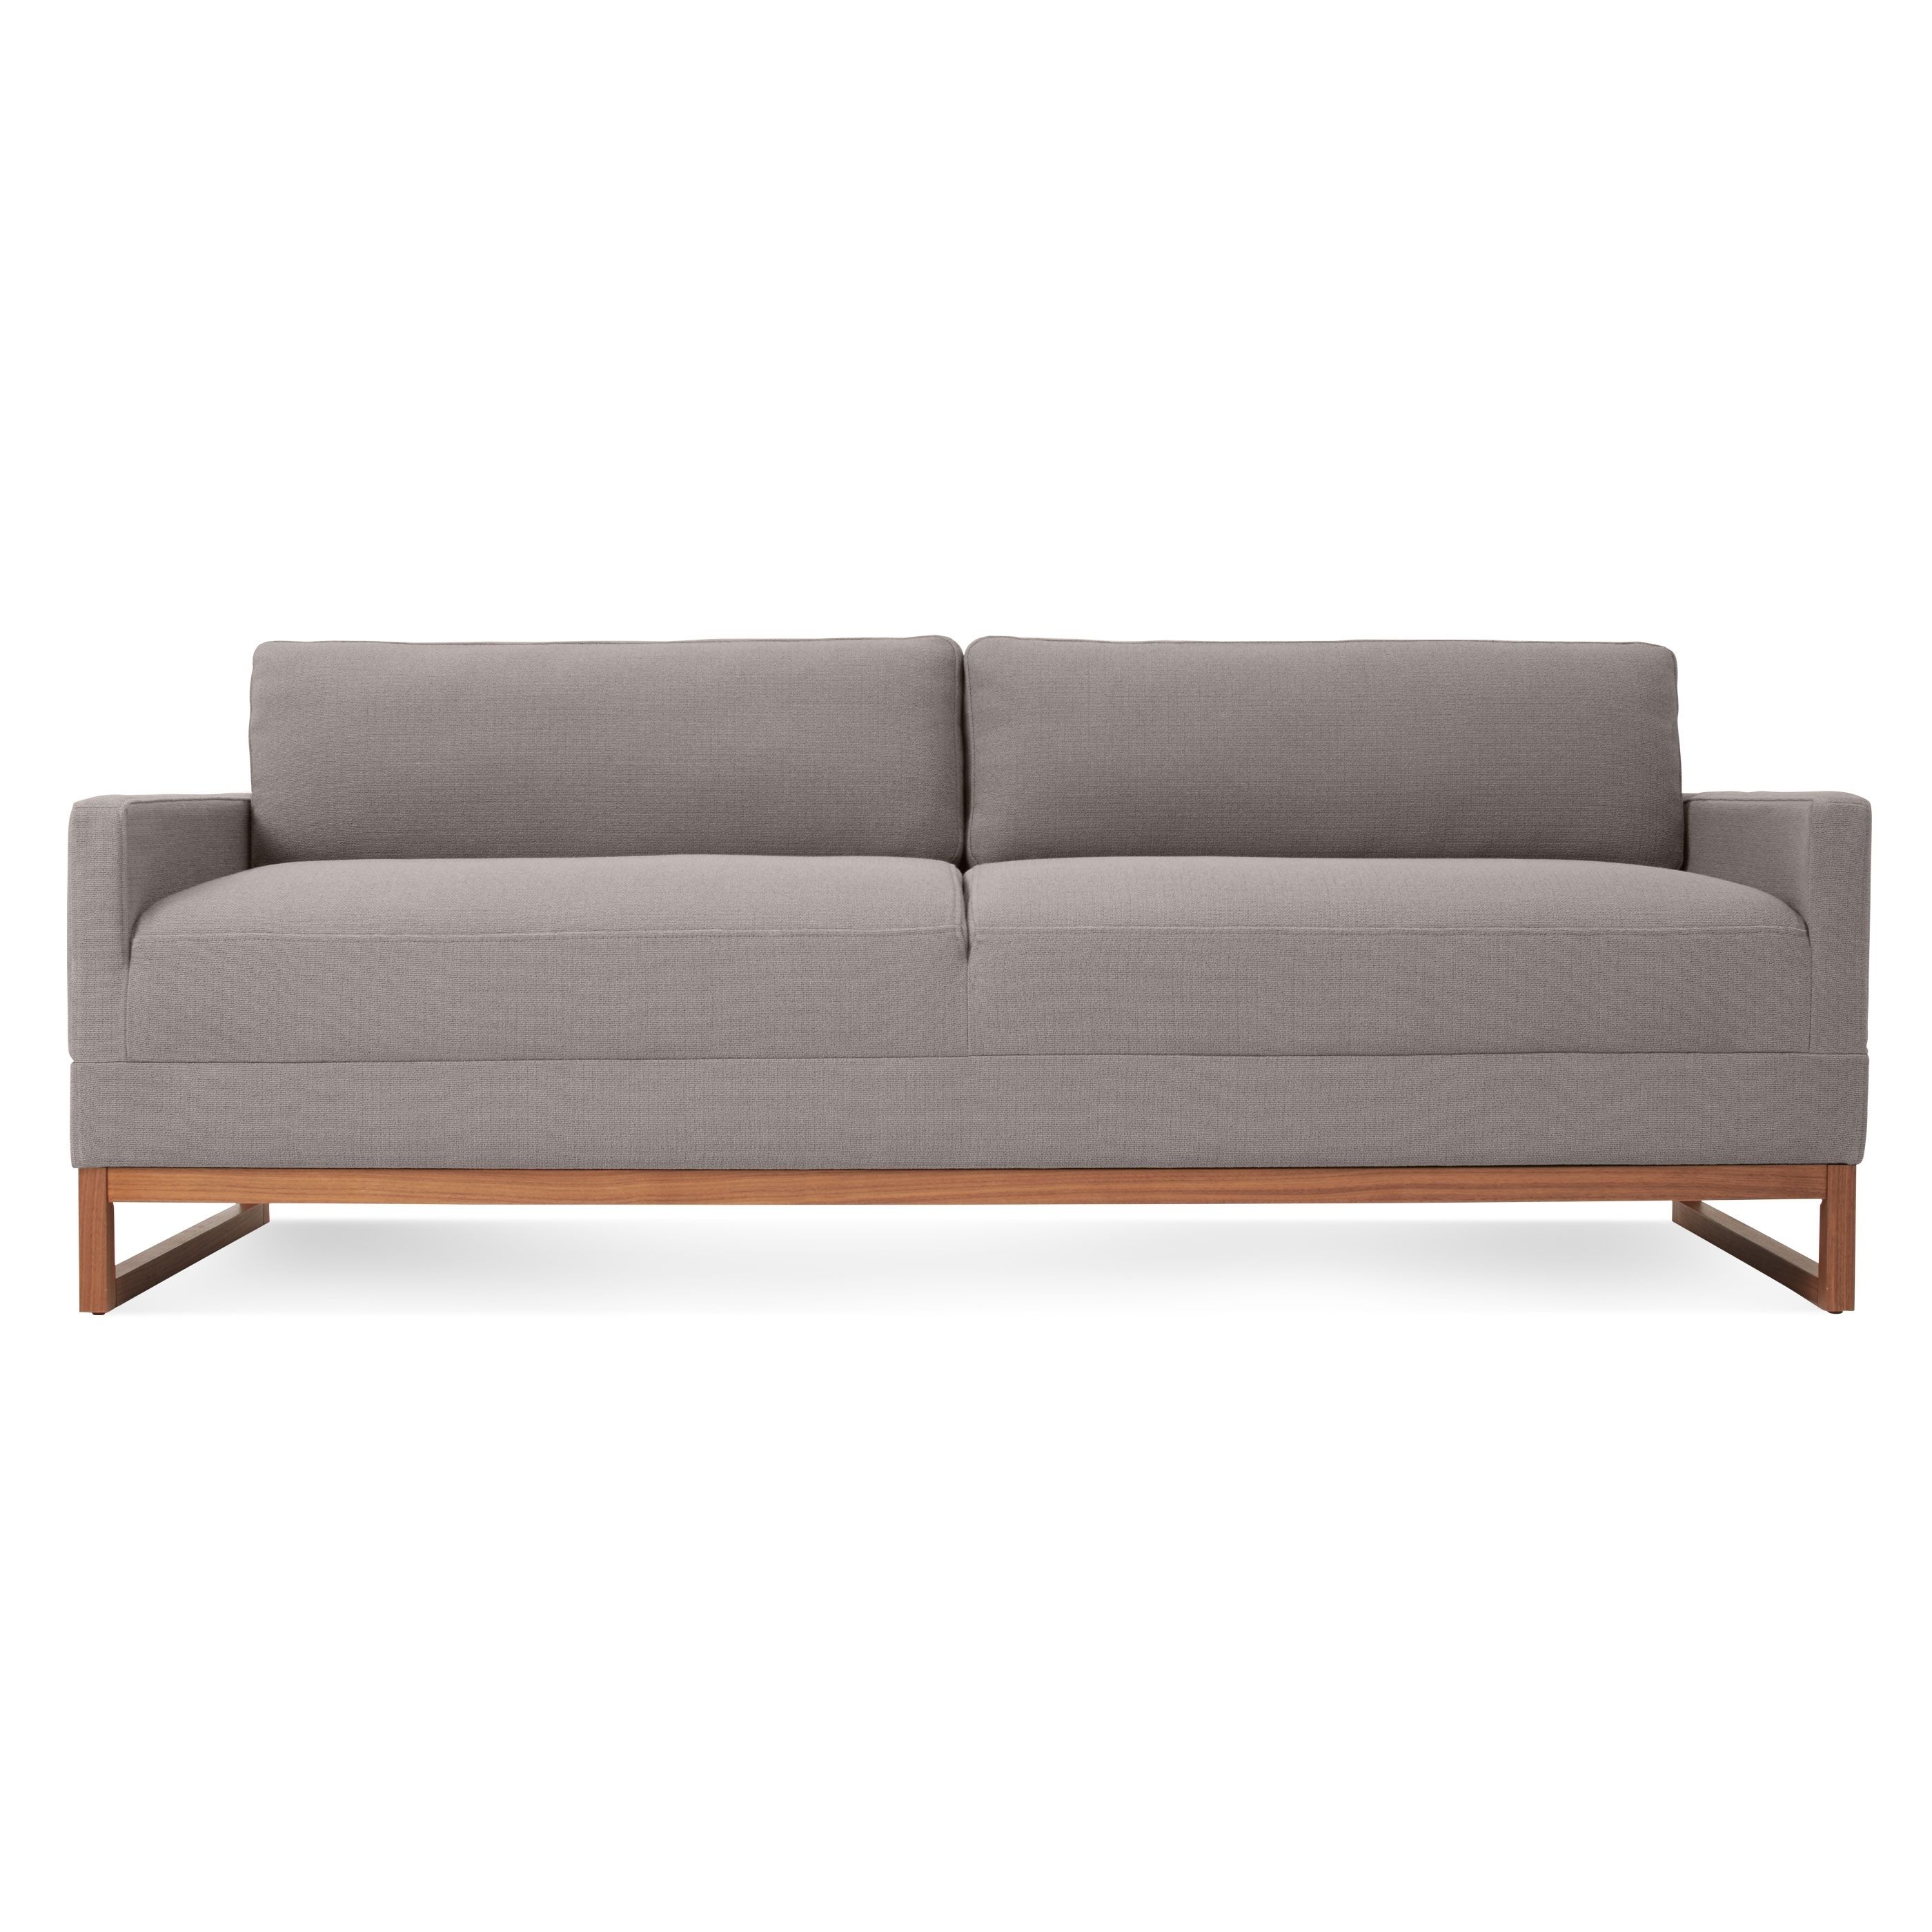 Trendy Modern Sofas Within Sleeper Sofa – Diplomat Convertible Sofa (View 15 of 20)